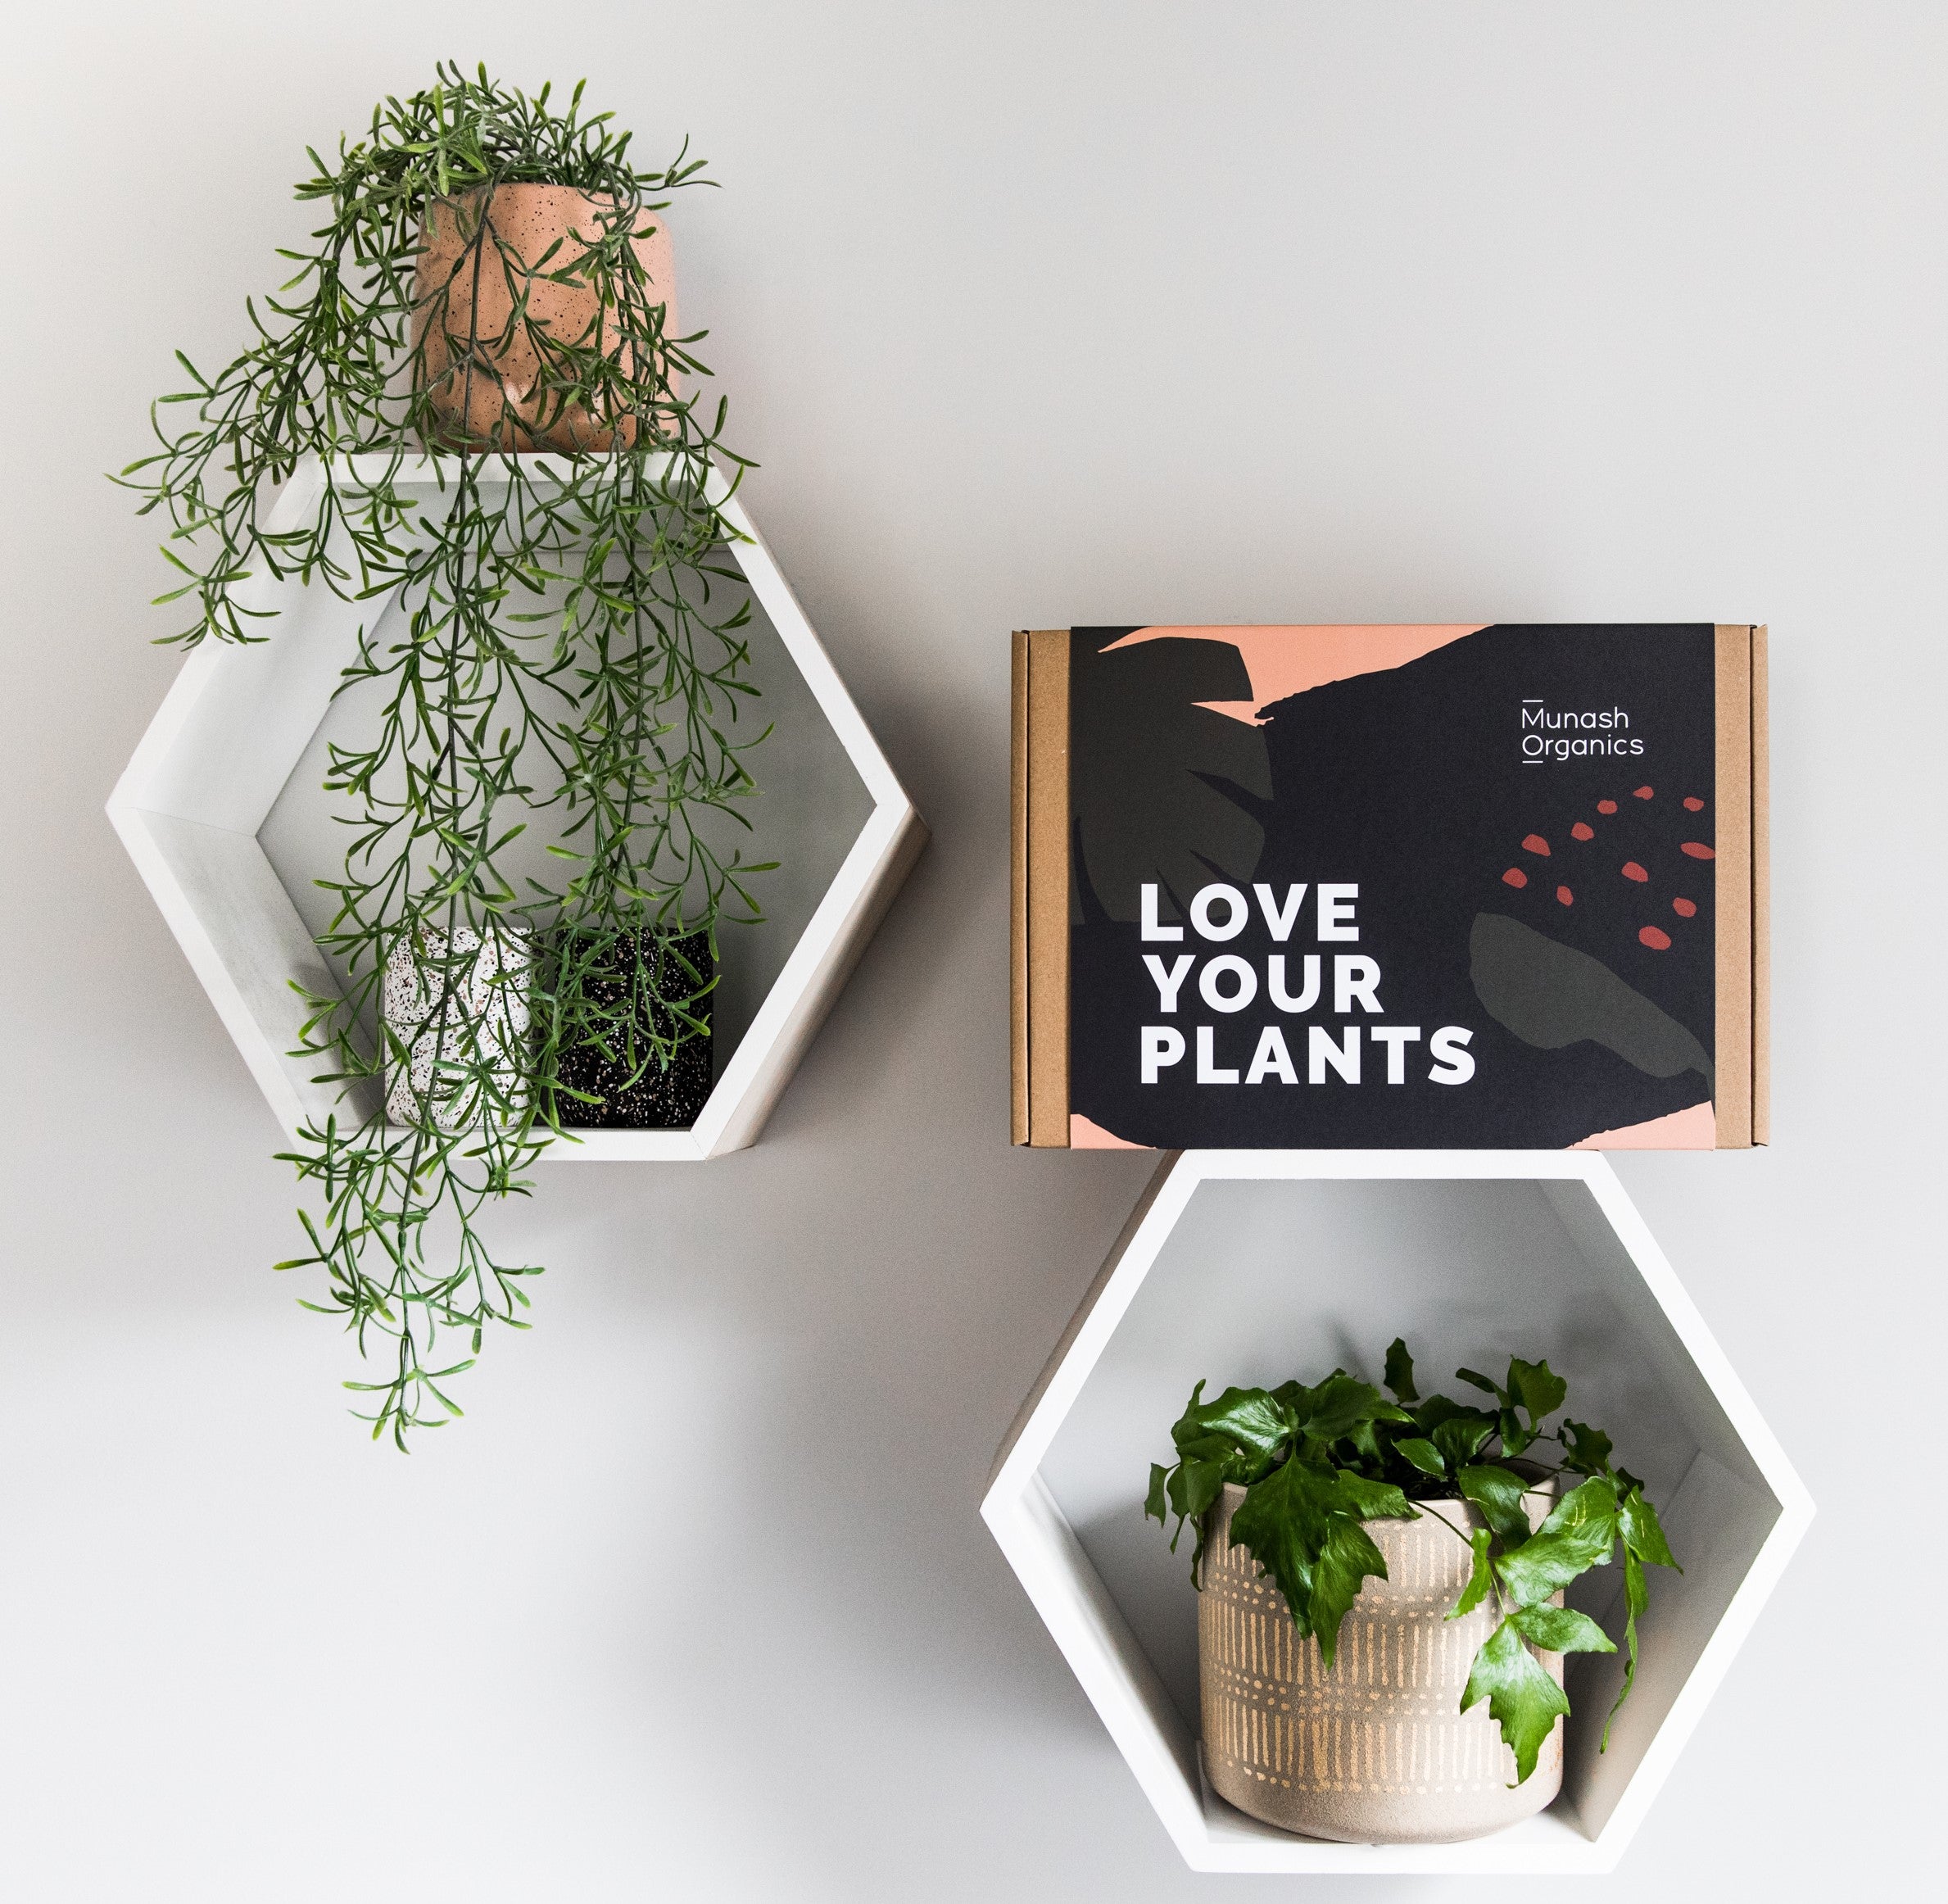 MUNASH LOVE YOUR PLANTS GIFT BOX